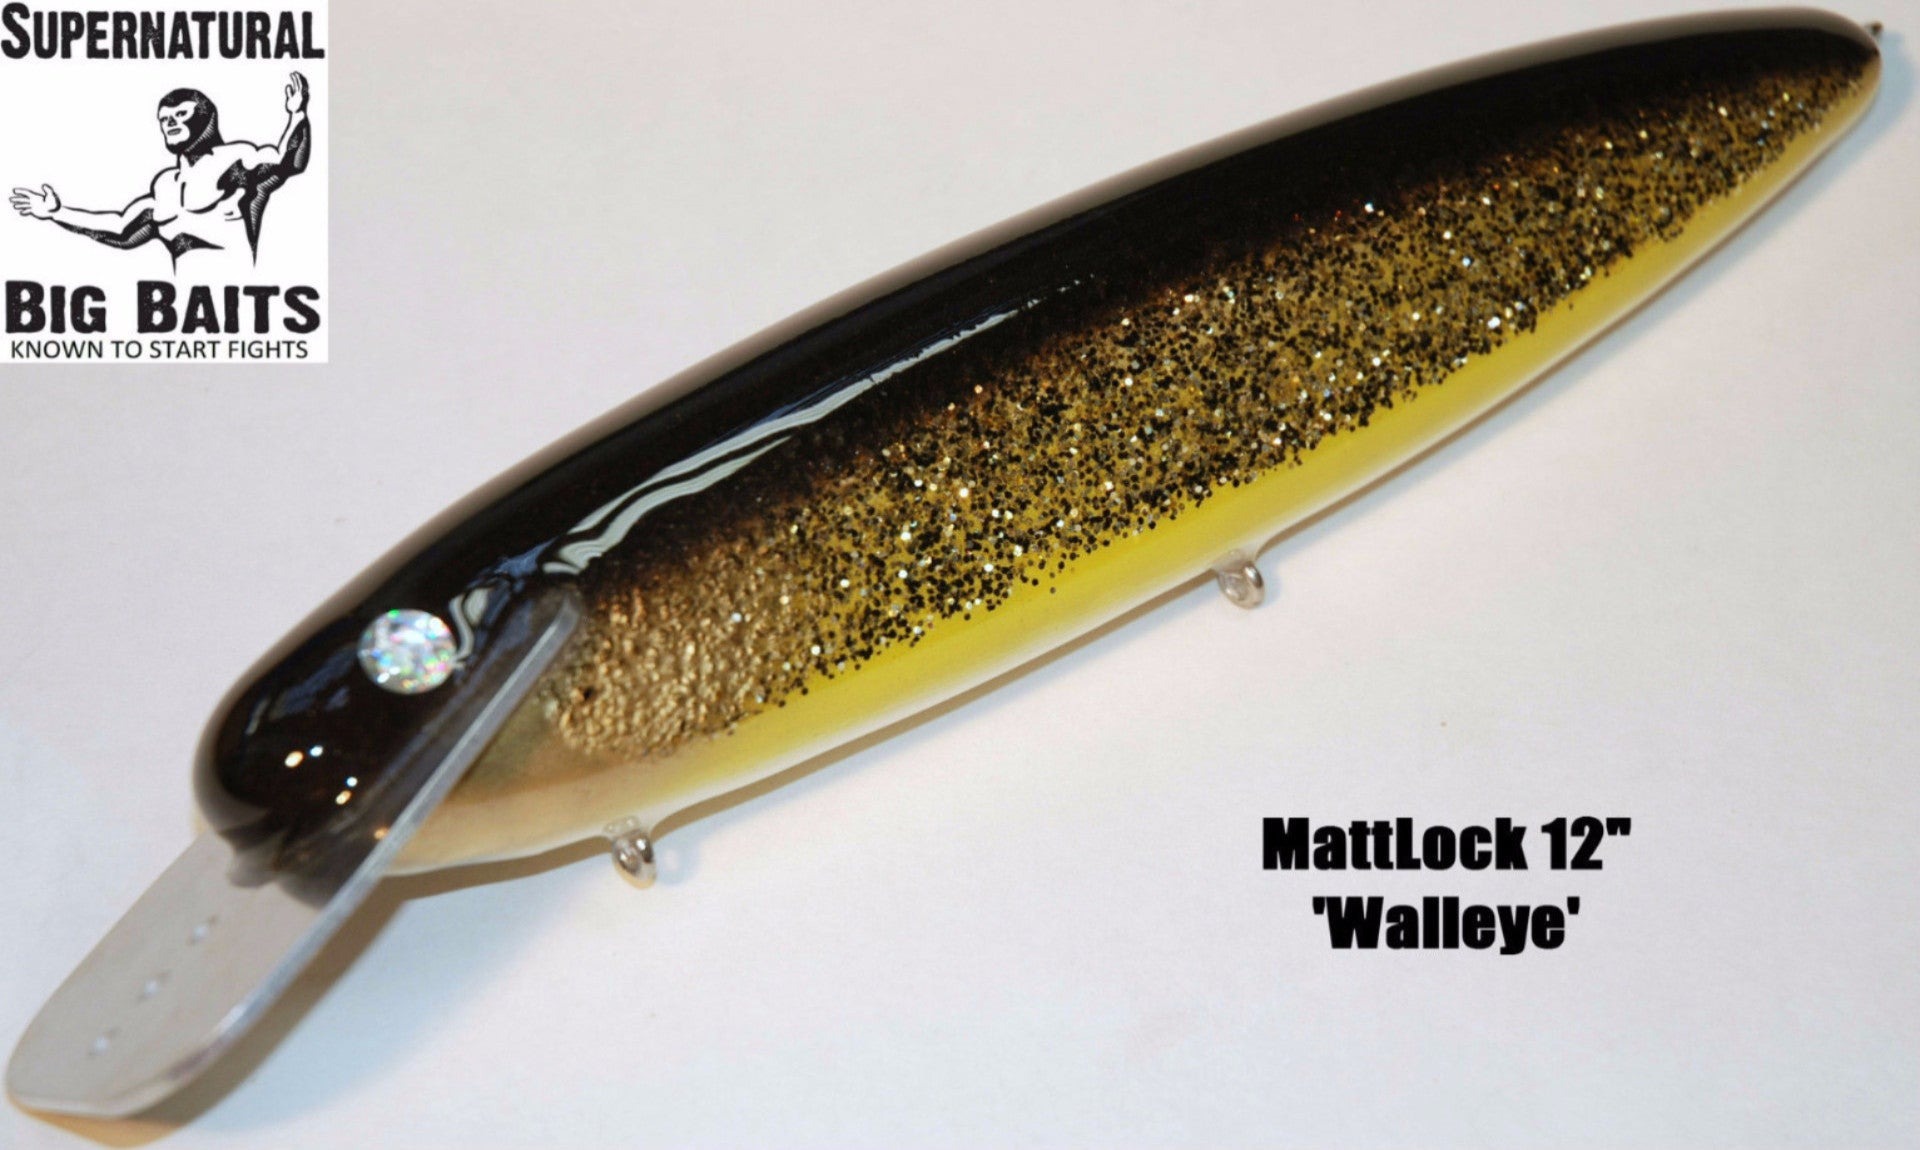 MattLock 12 Standard Walleye – Supernatural Big Baits